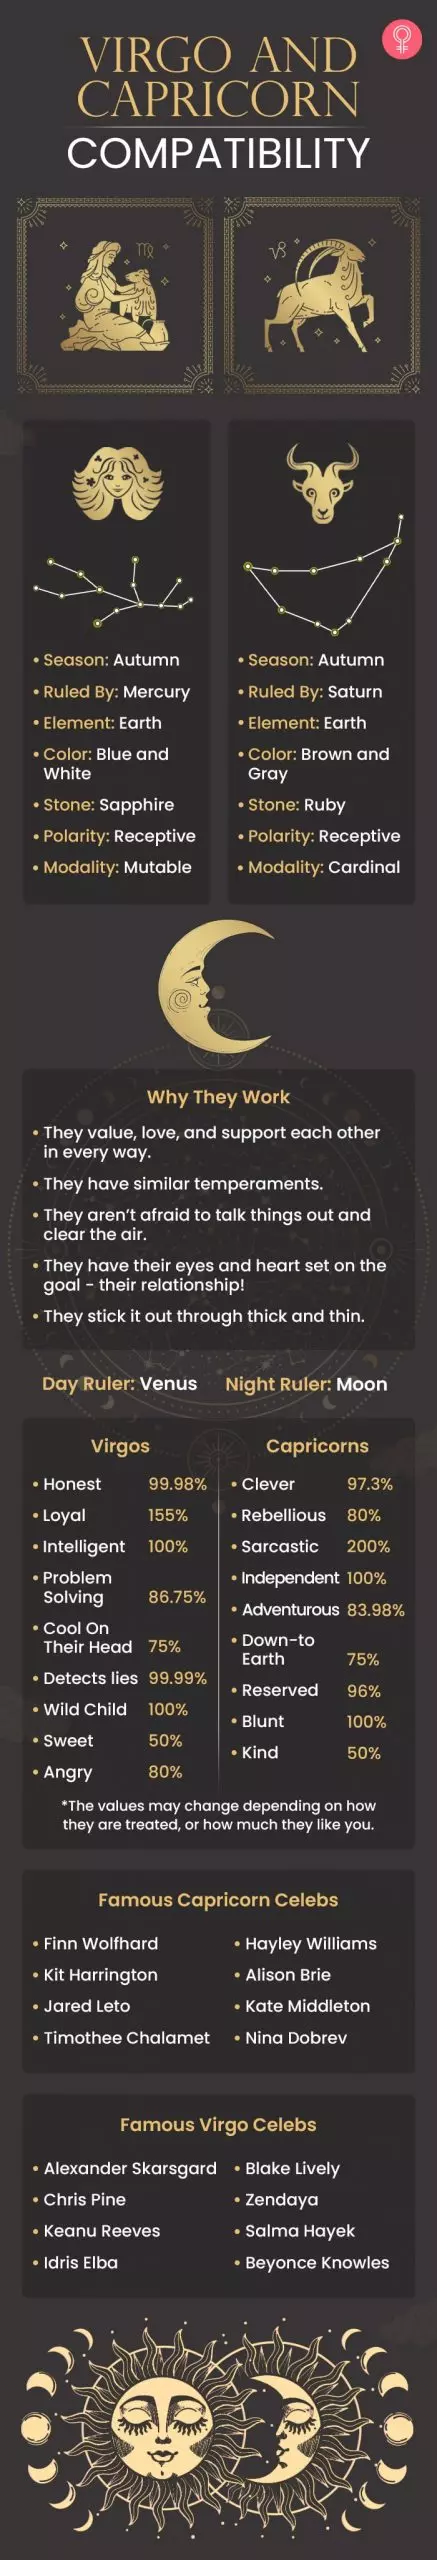 virgo and capricorn compatibility (infographic)